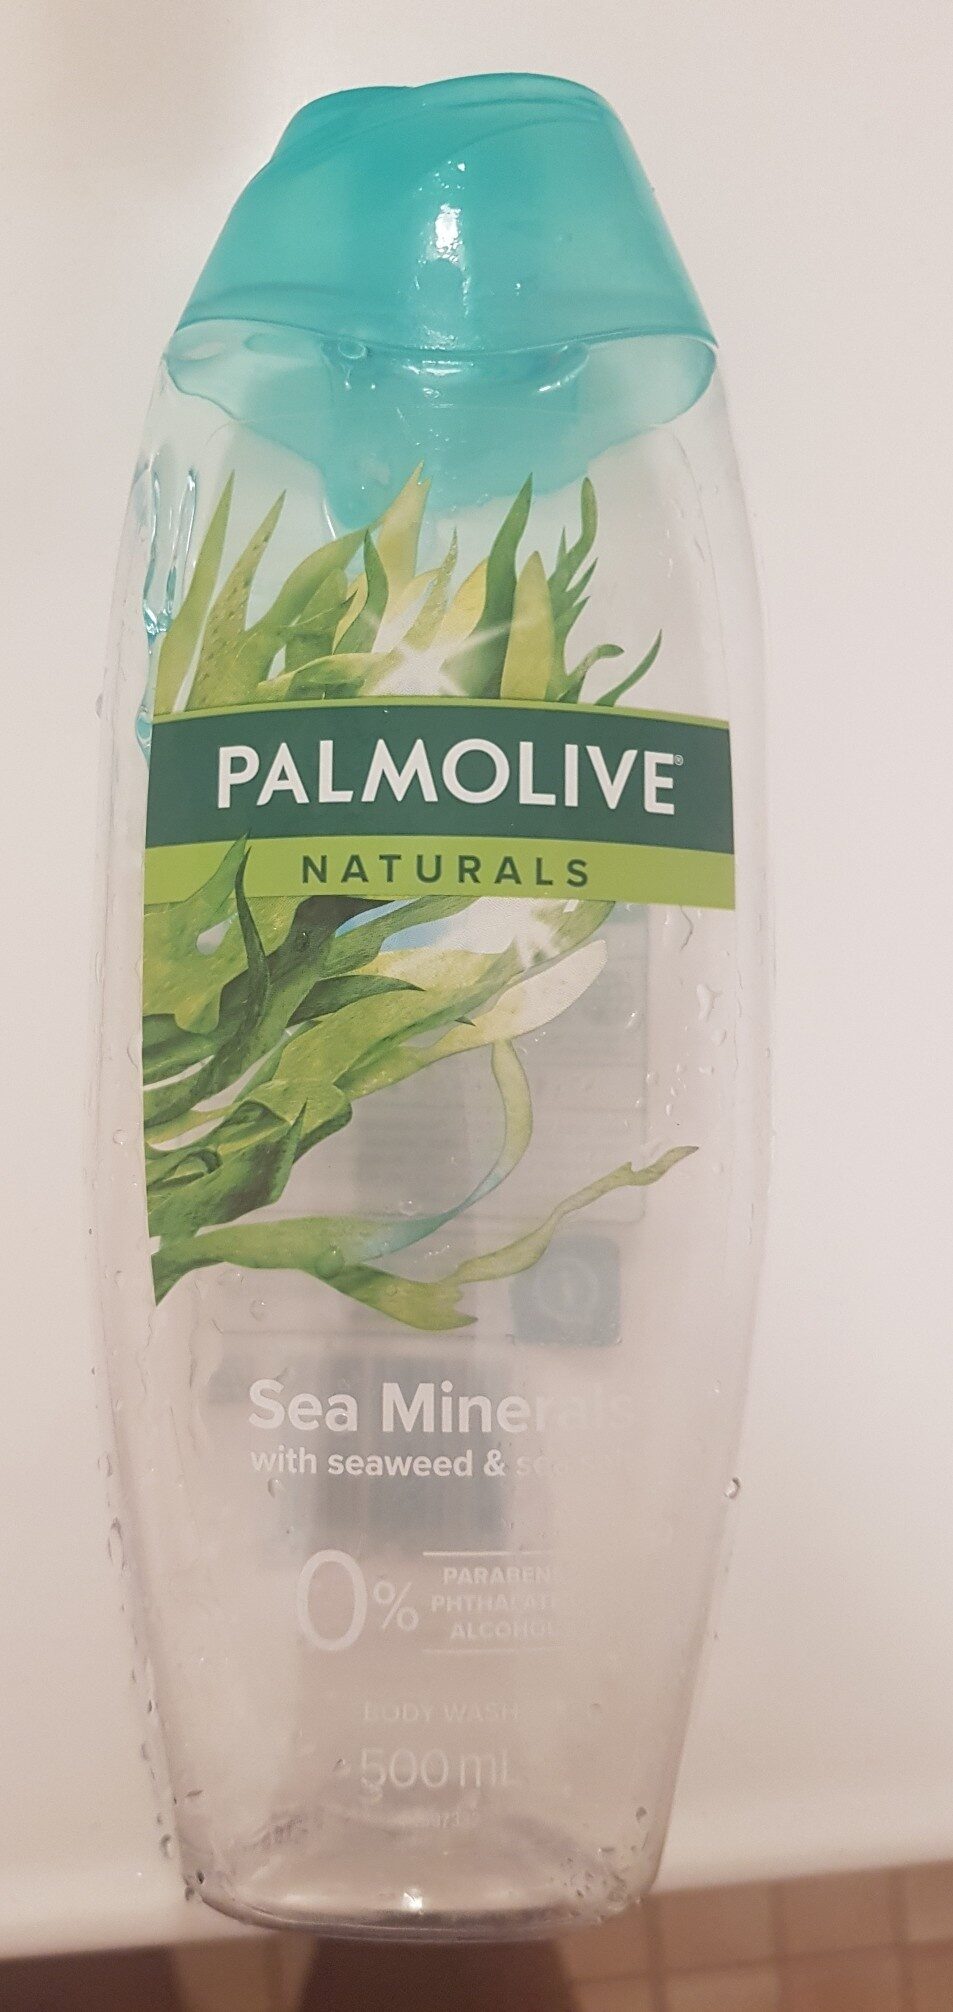 Palmolive Naturals - Product - en